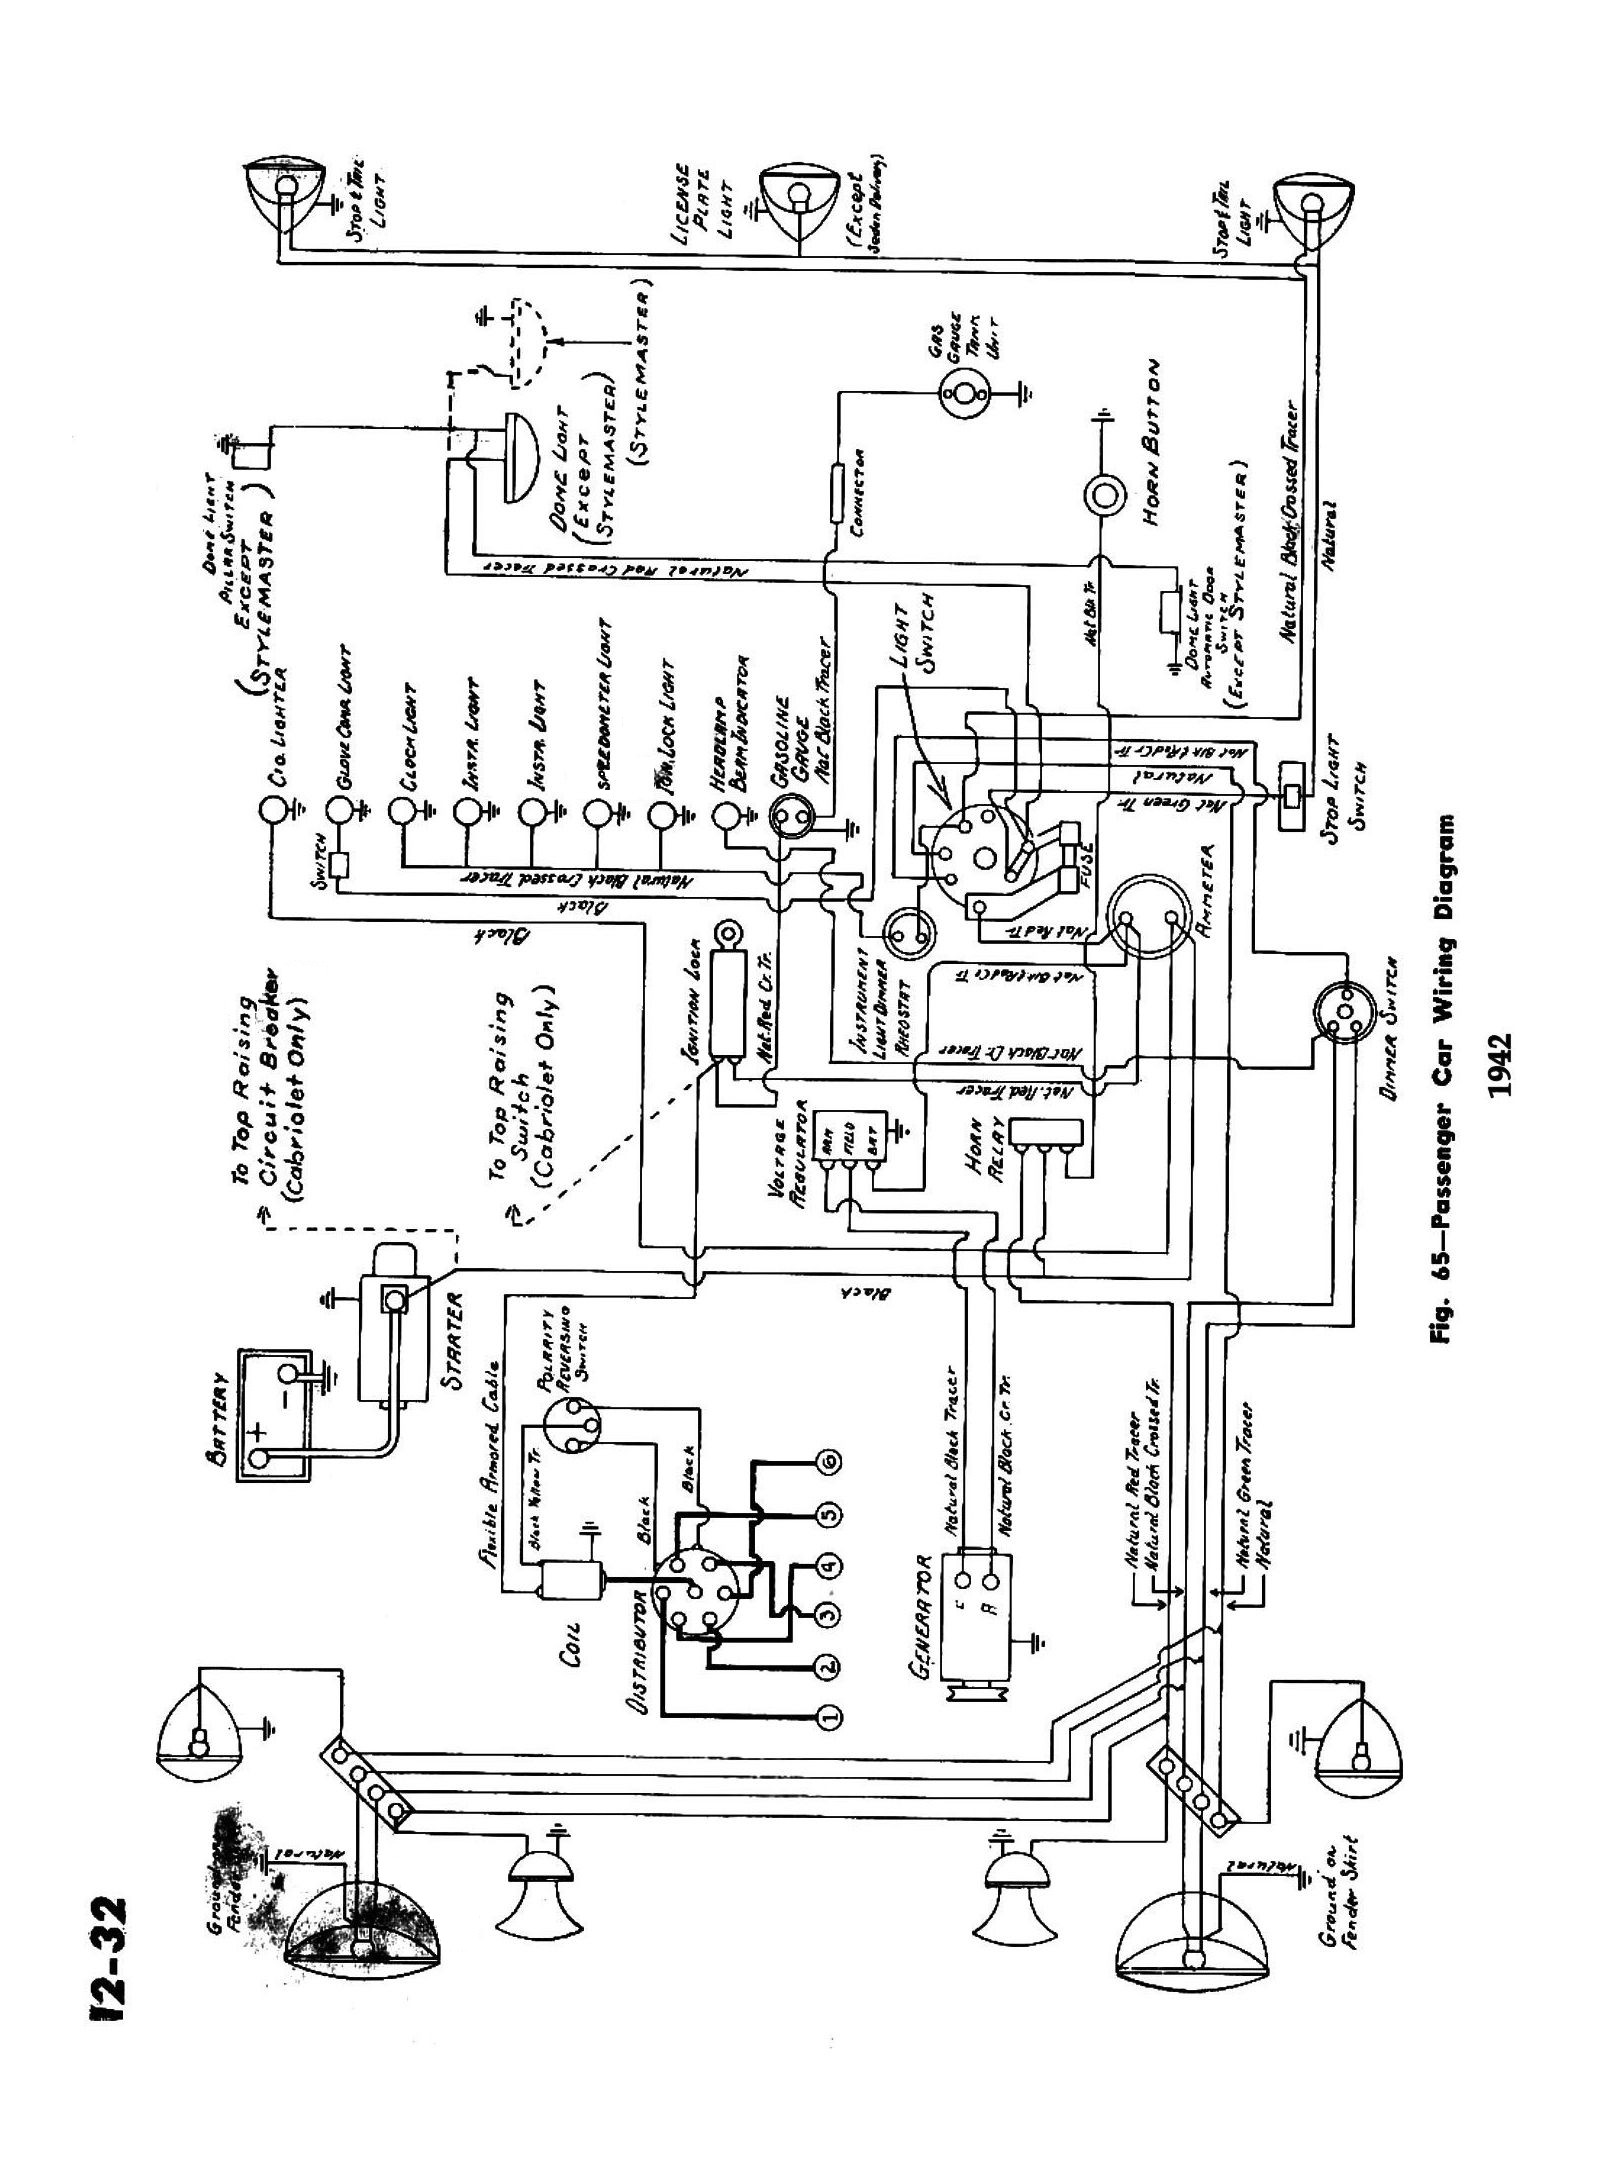 2006 Peterbilt 379 Fuse Panel Diagram - General Wiring Diagram